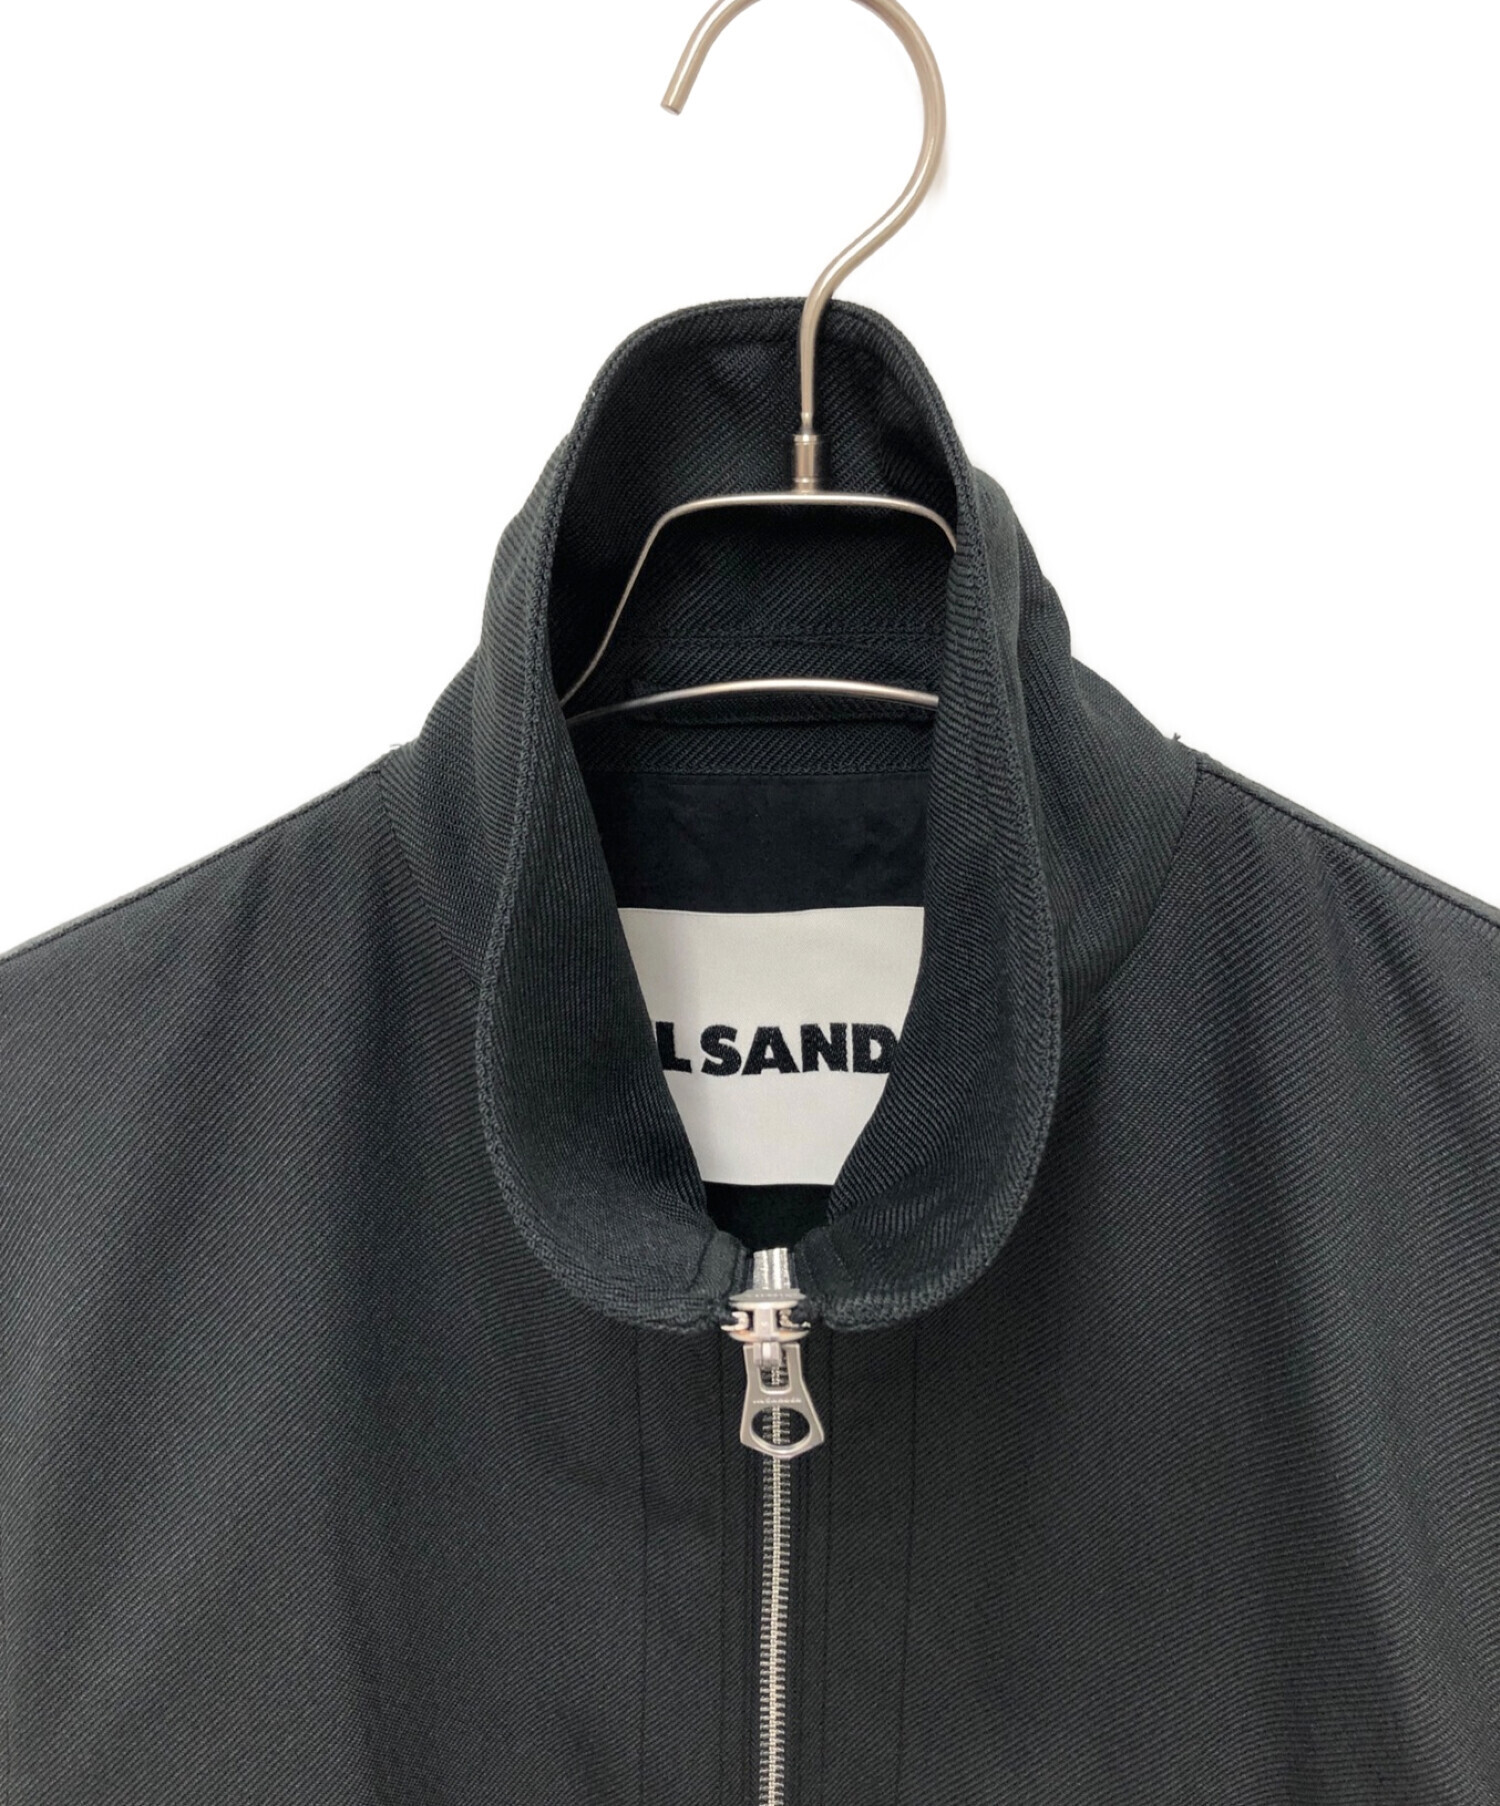 JIL SANDER ジルサンダー SS Sport Zip Up Overcoatスポーツジップアップオーバーコート ブラック  サイズ: